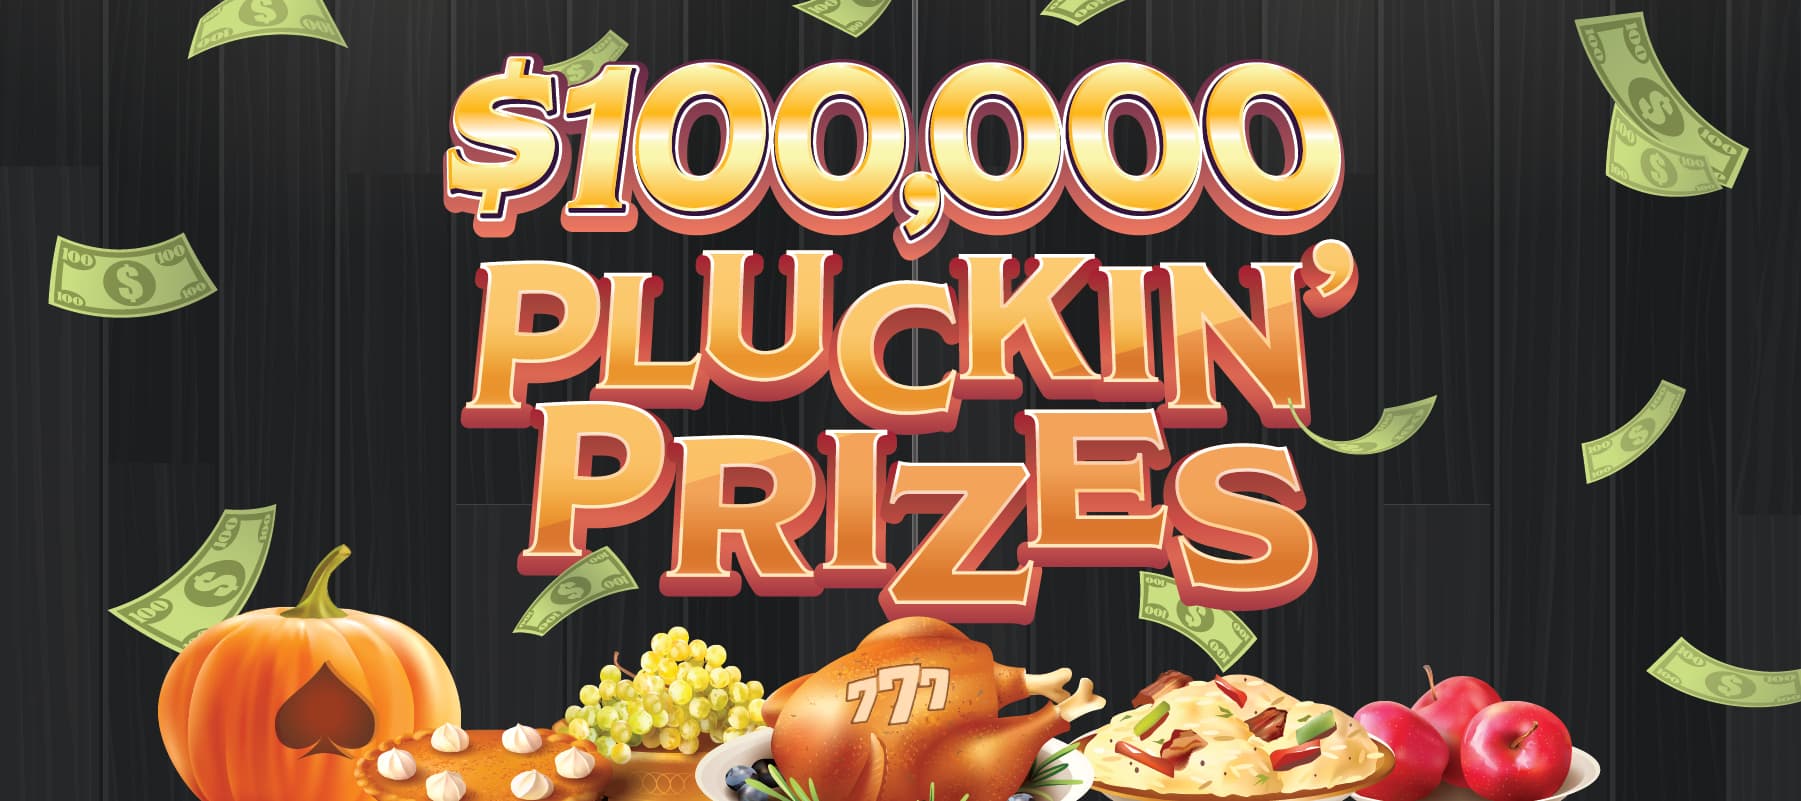 100000 Pluckin Prizes promotion